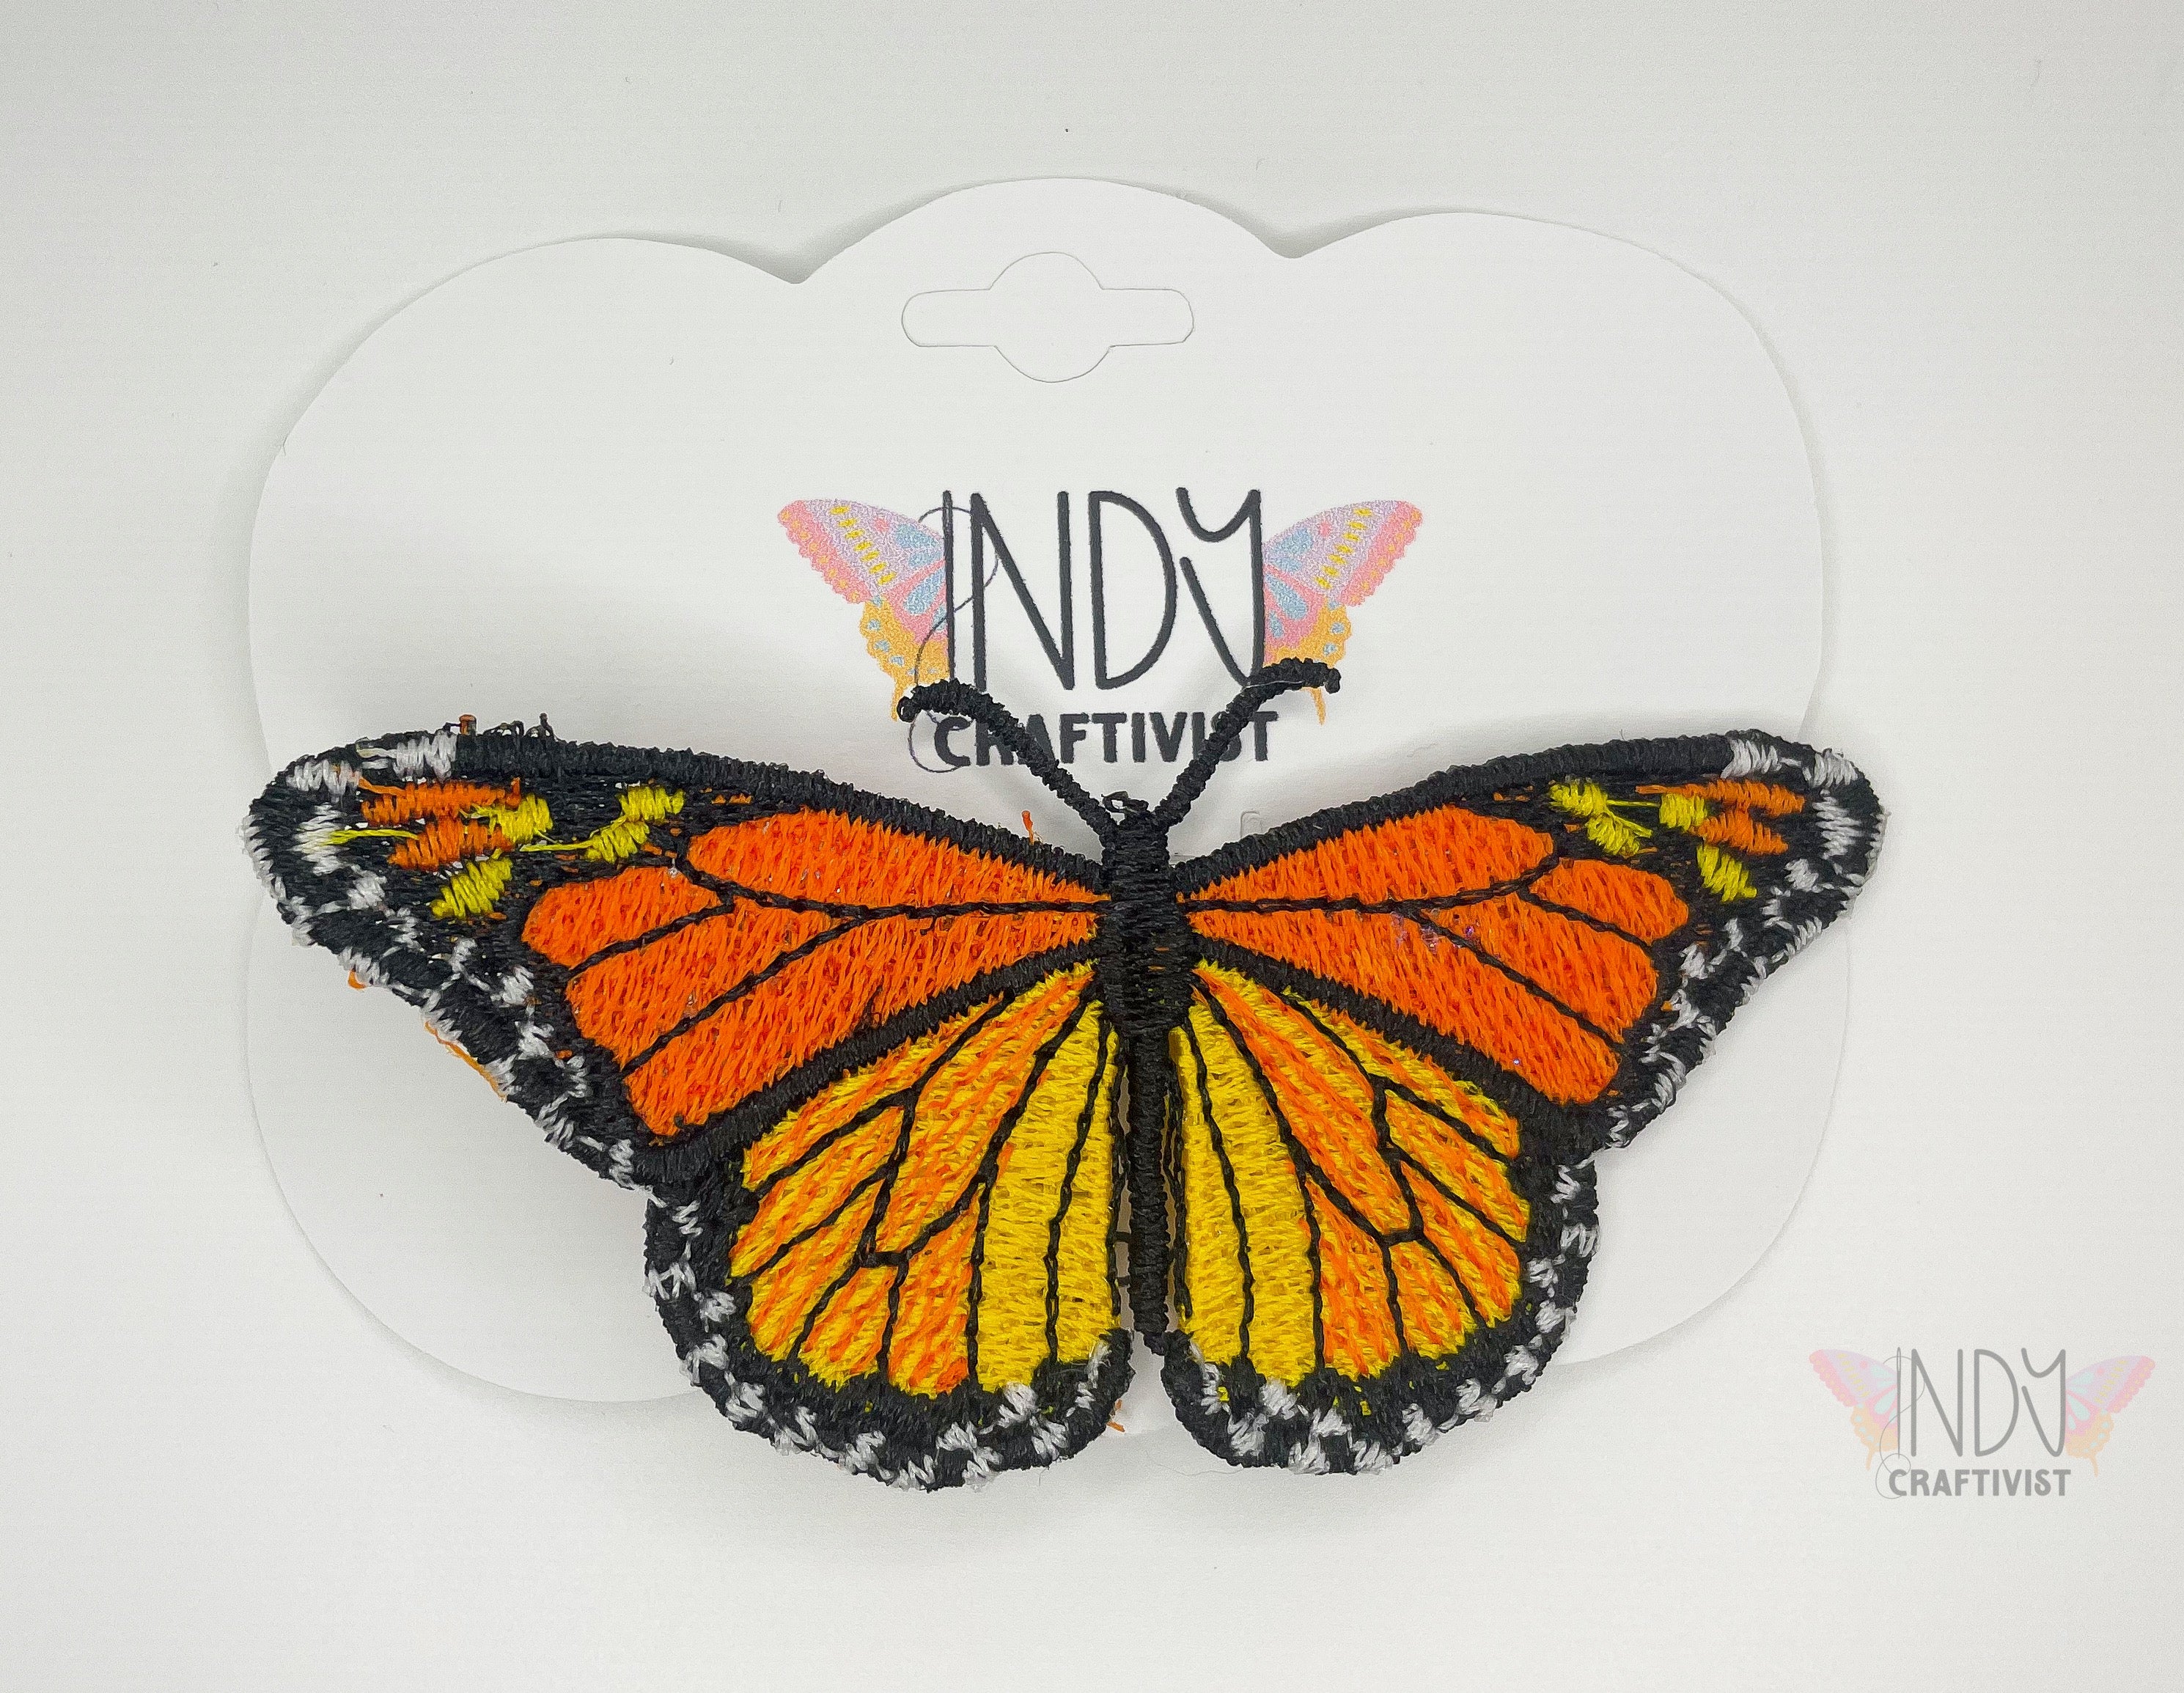 British Butterfly - Stick & Stitch Embroidery Pattern – Thread Honey